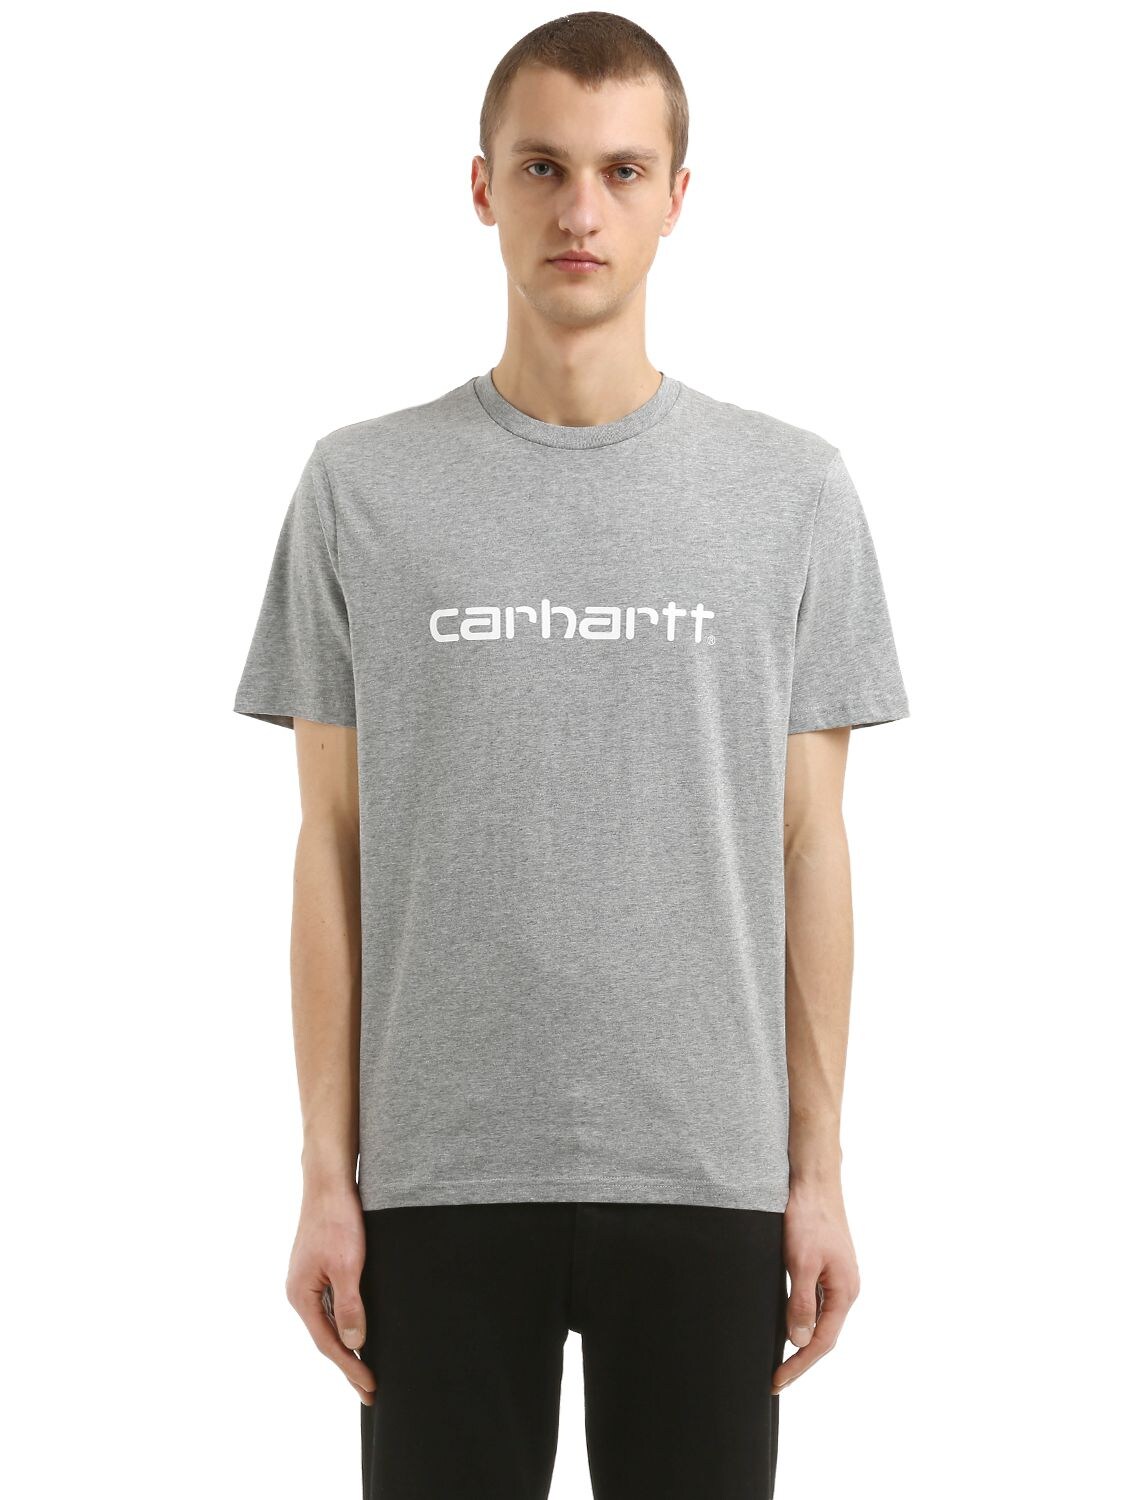 Carhartt Logo Printed Cotton Jersey T-shirt In Grey